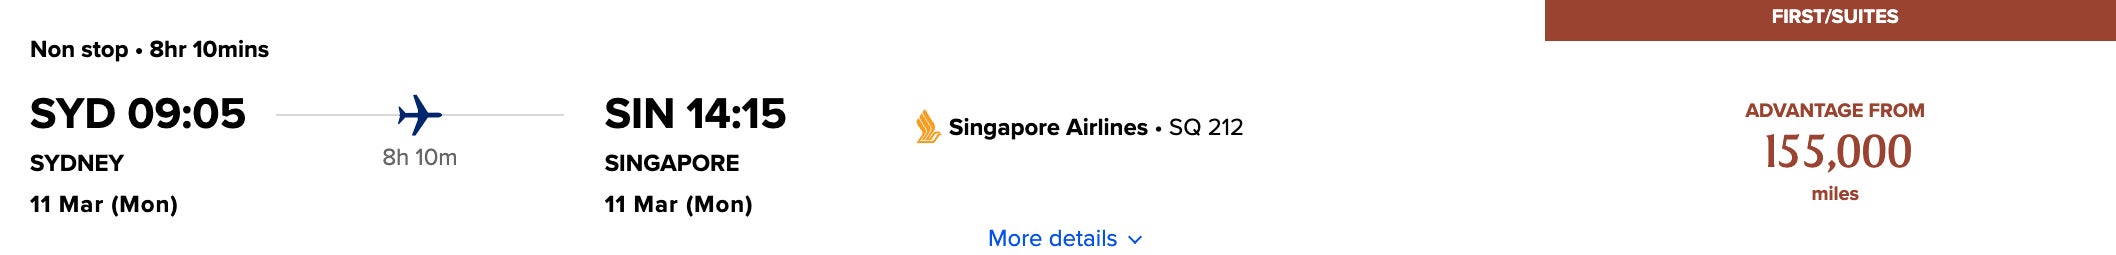 Singapore Krisflyer SYD-SIN Suites 155k